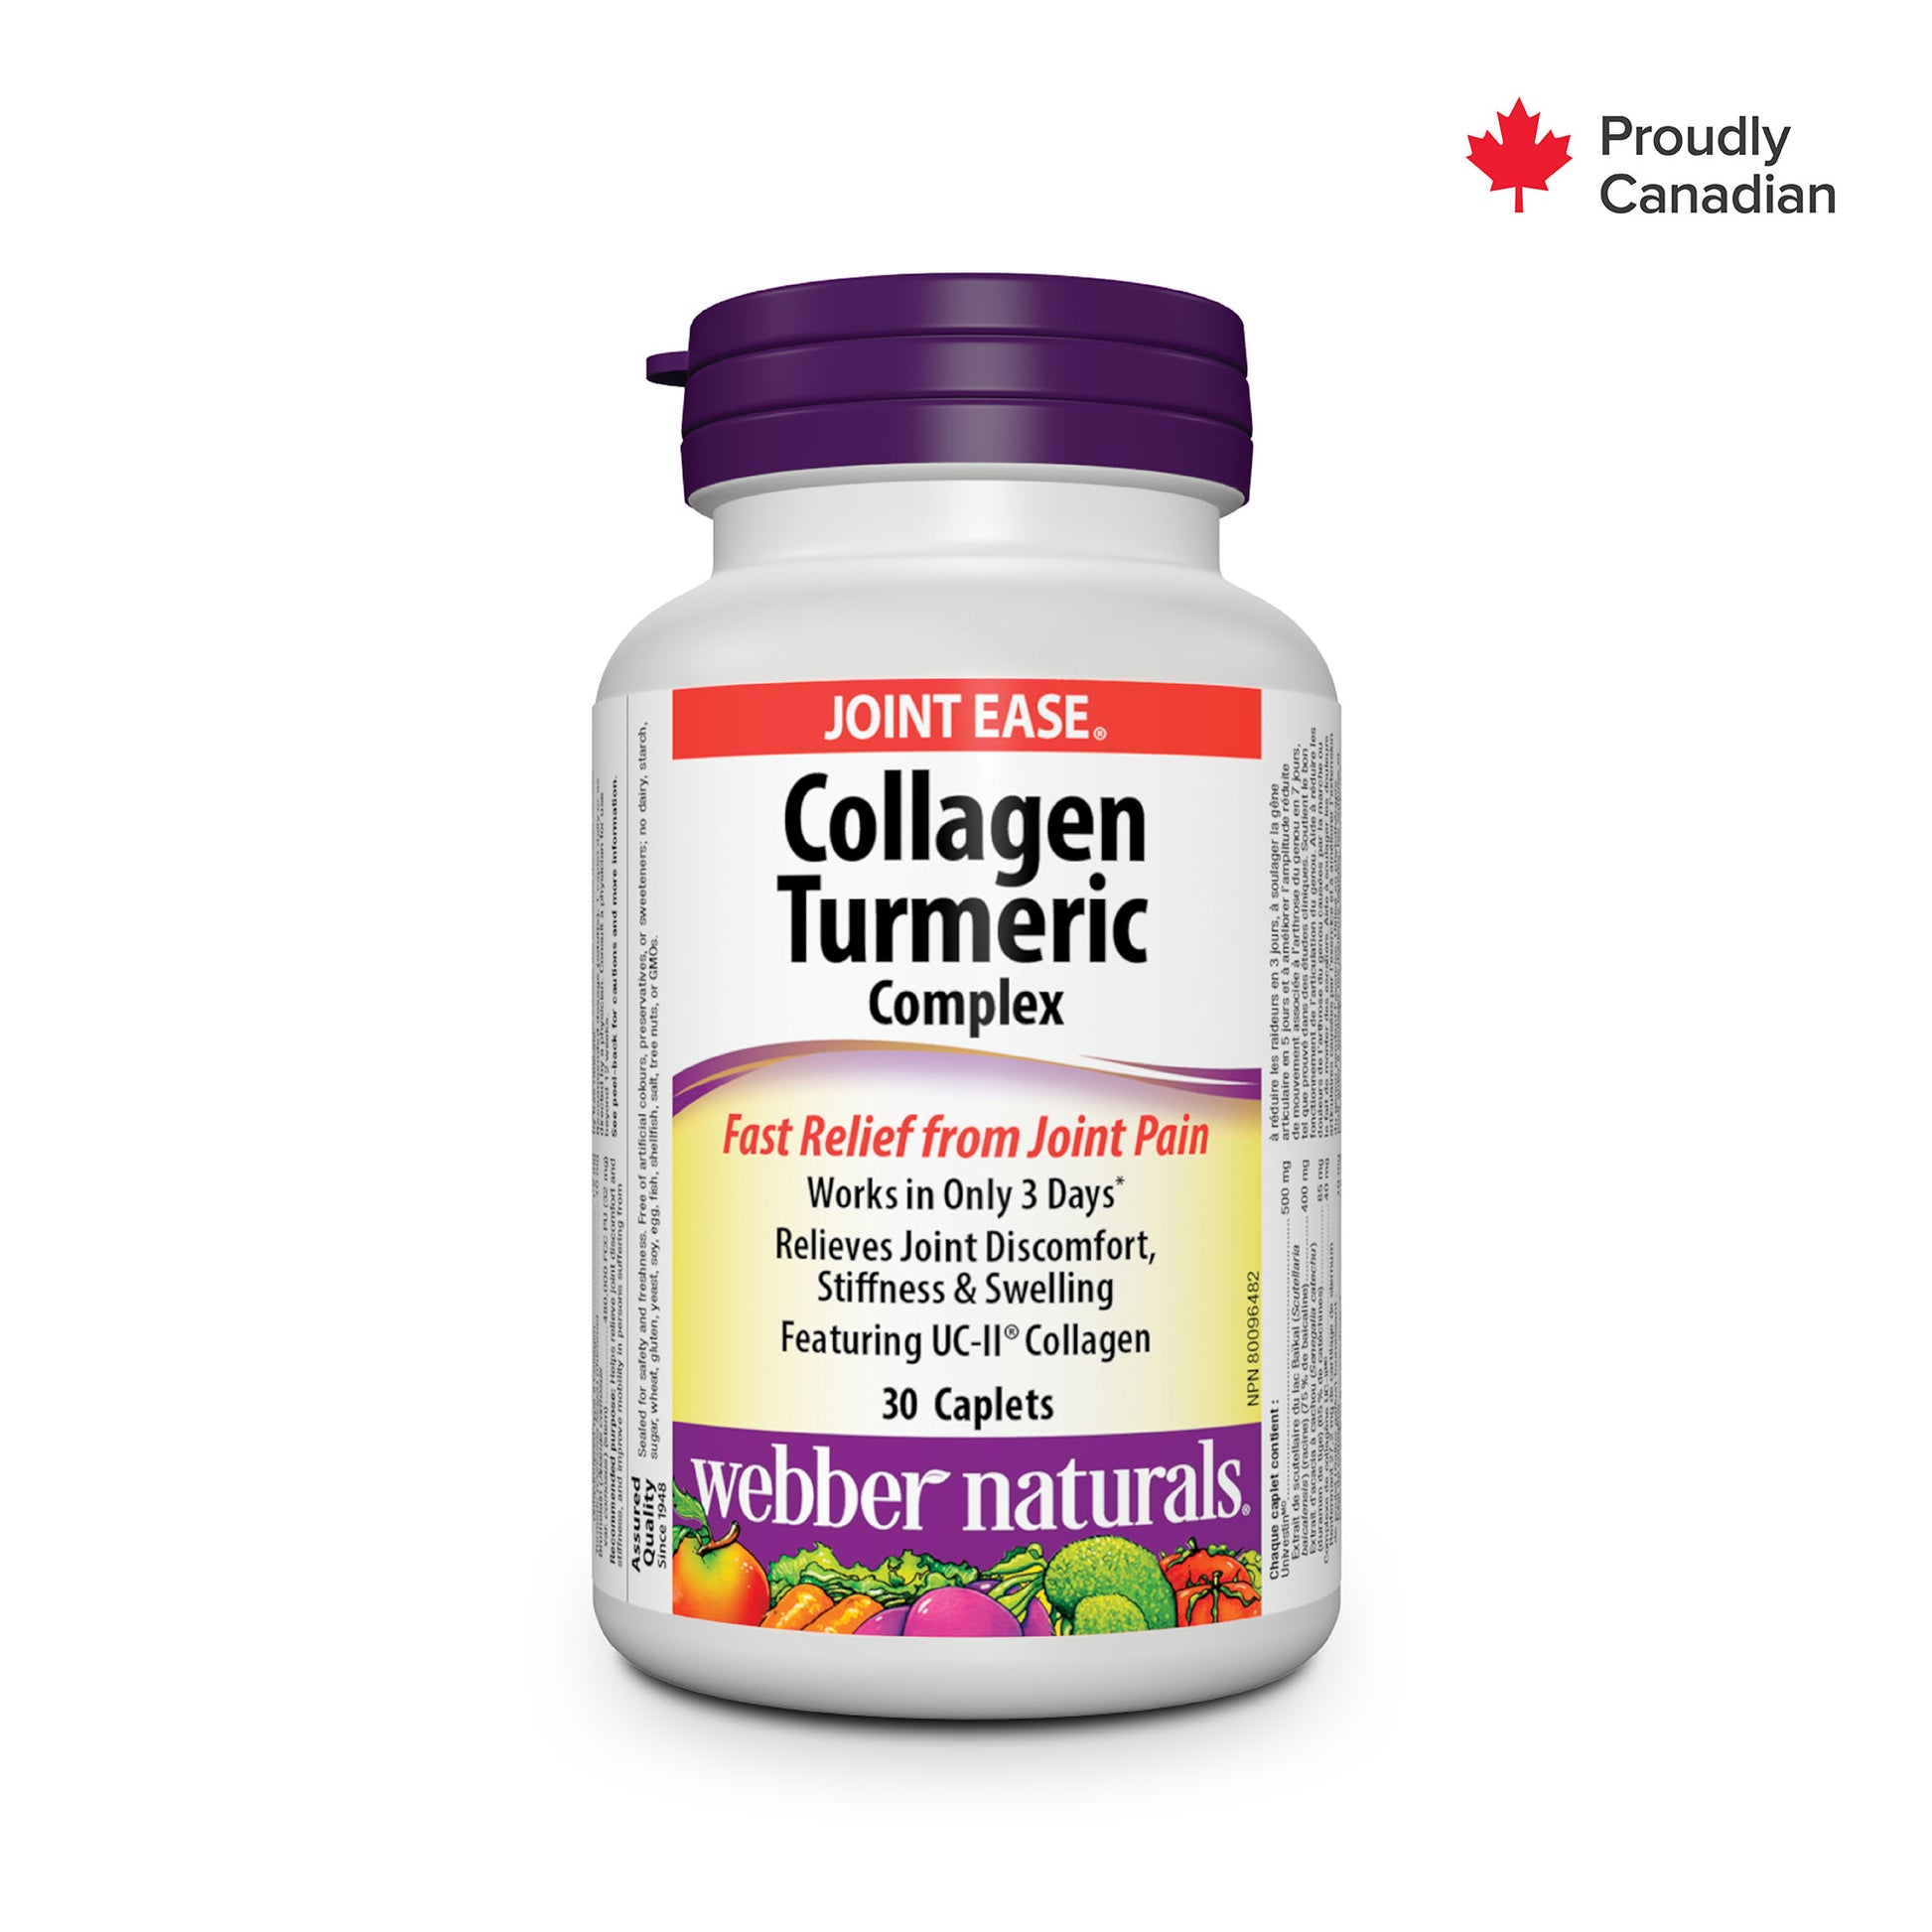 Collagen Turmeric Complex Joint Ease® for Webber Naturals|v|hi-res|WN3660